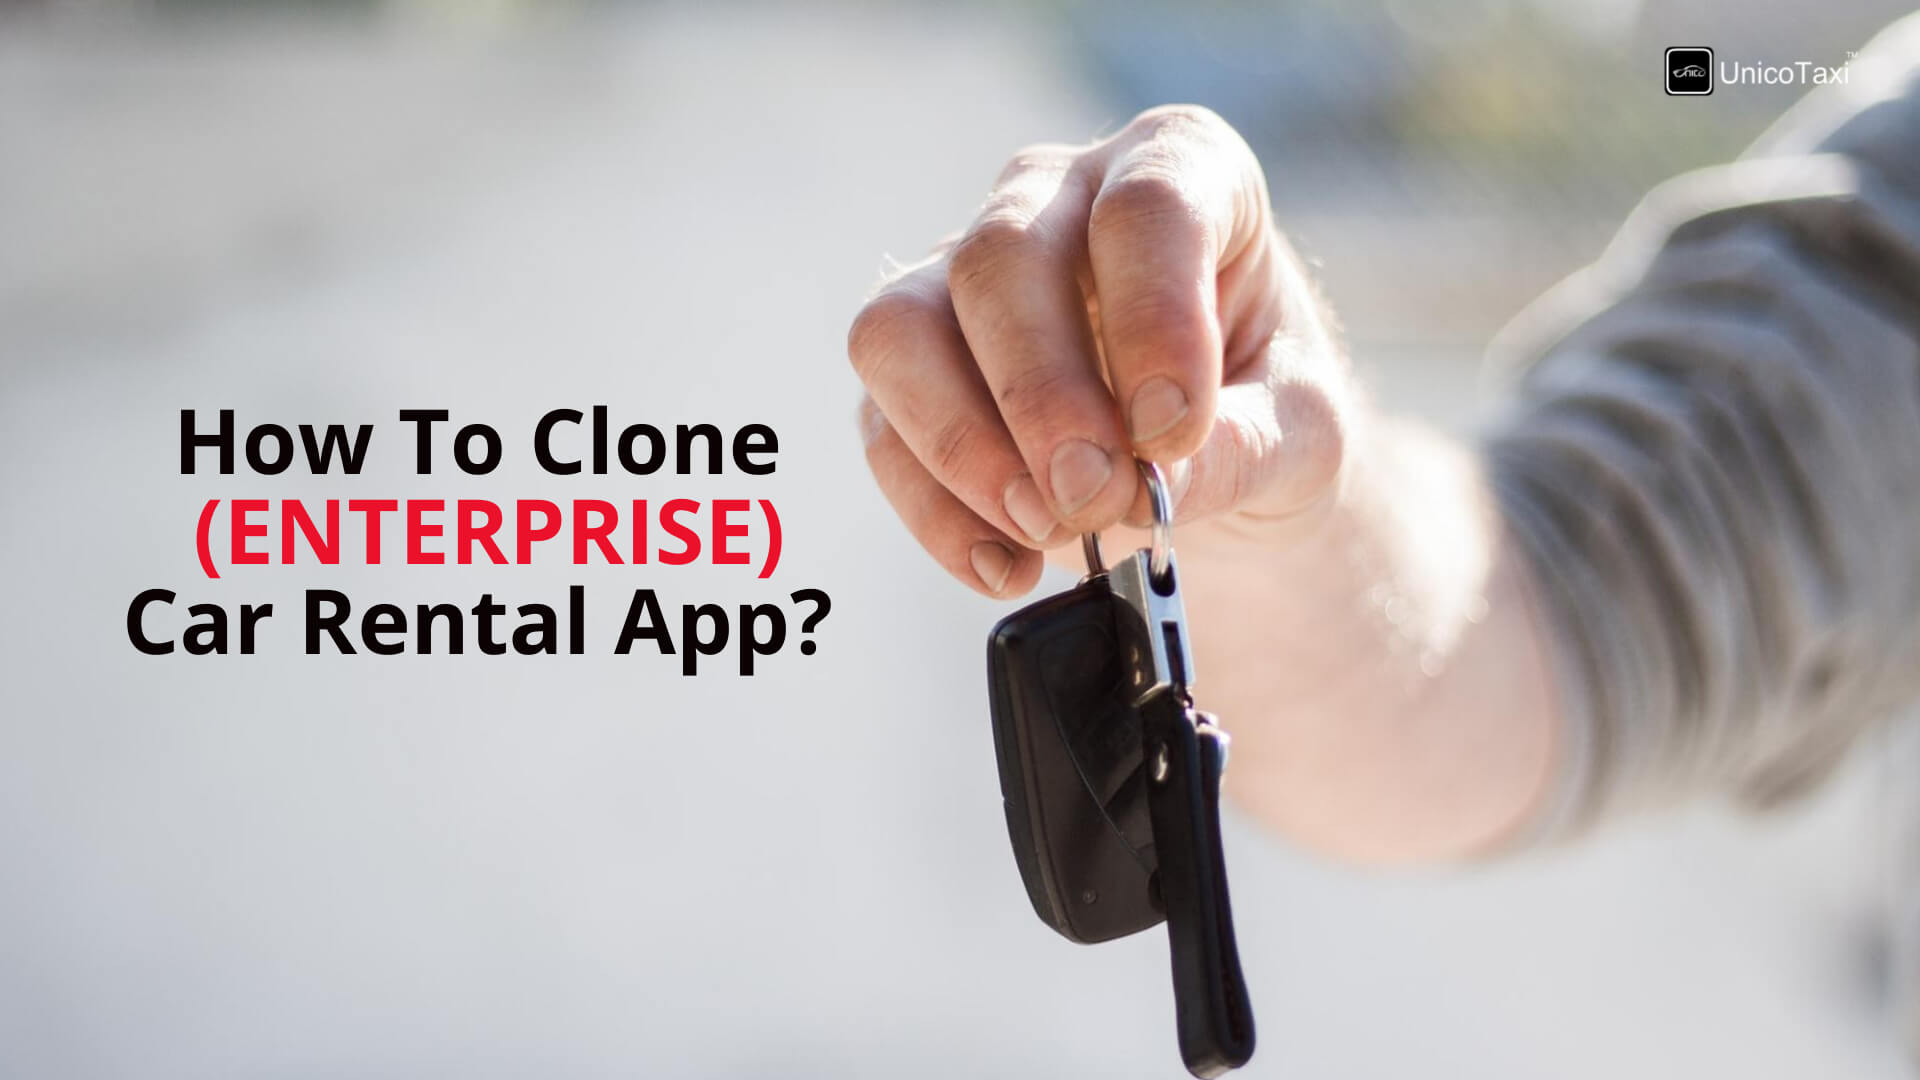 How to Clone Enterprise Car Rental App?